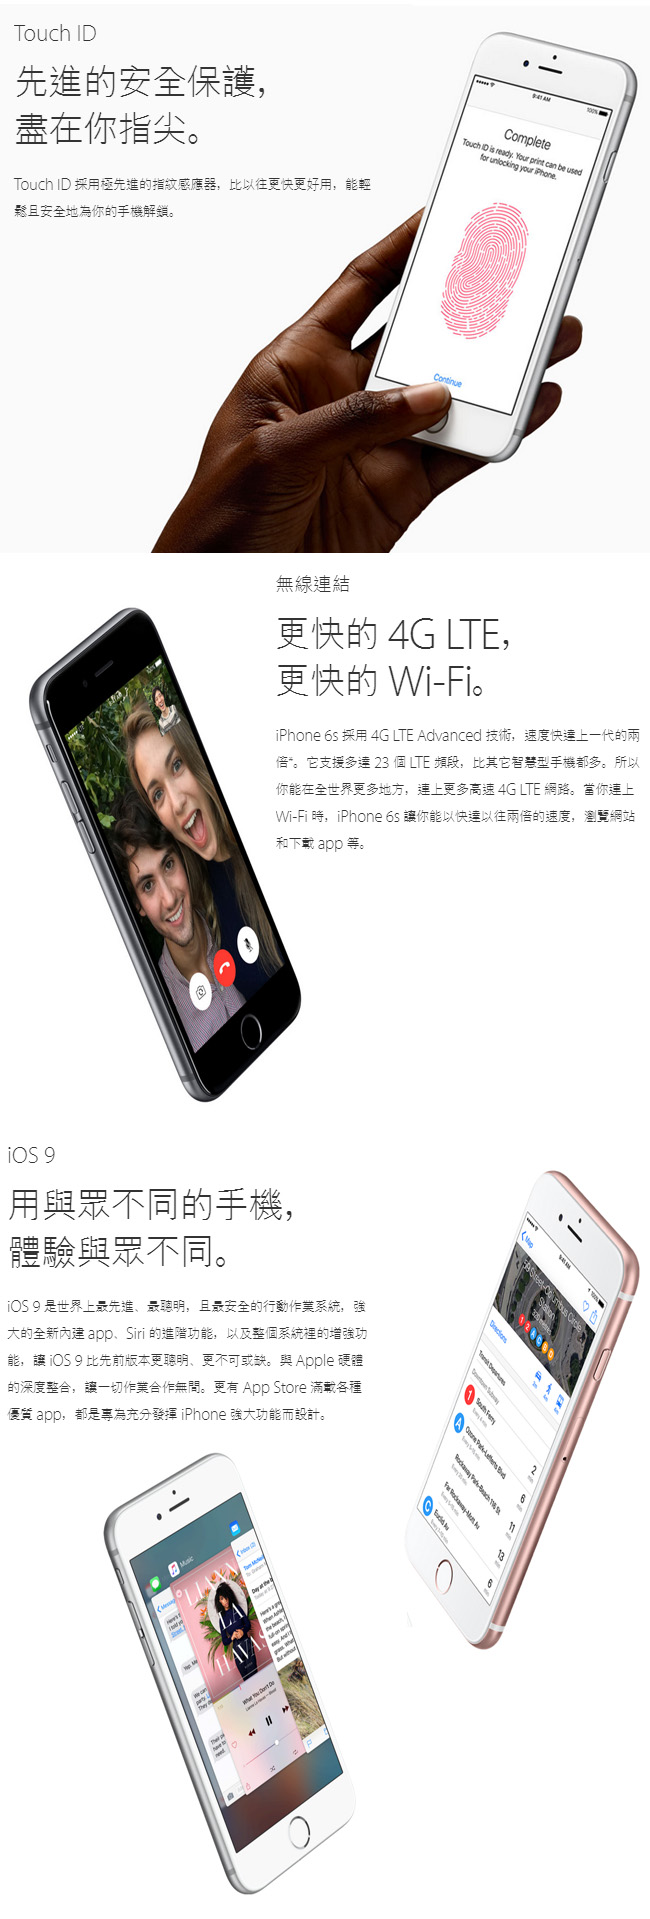 Apple iPhone 6s 32G 4.7吋智慧型手機